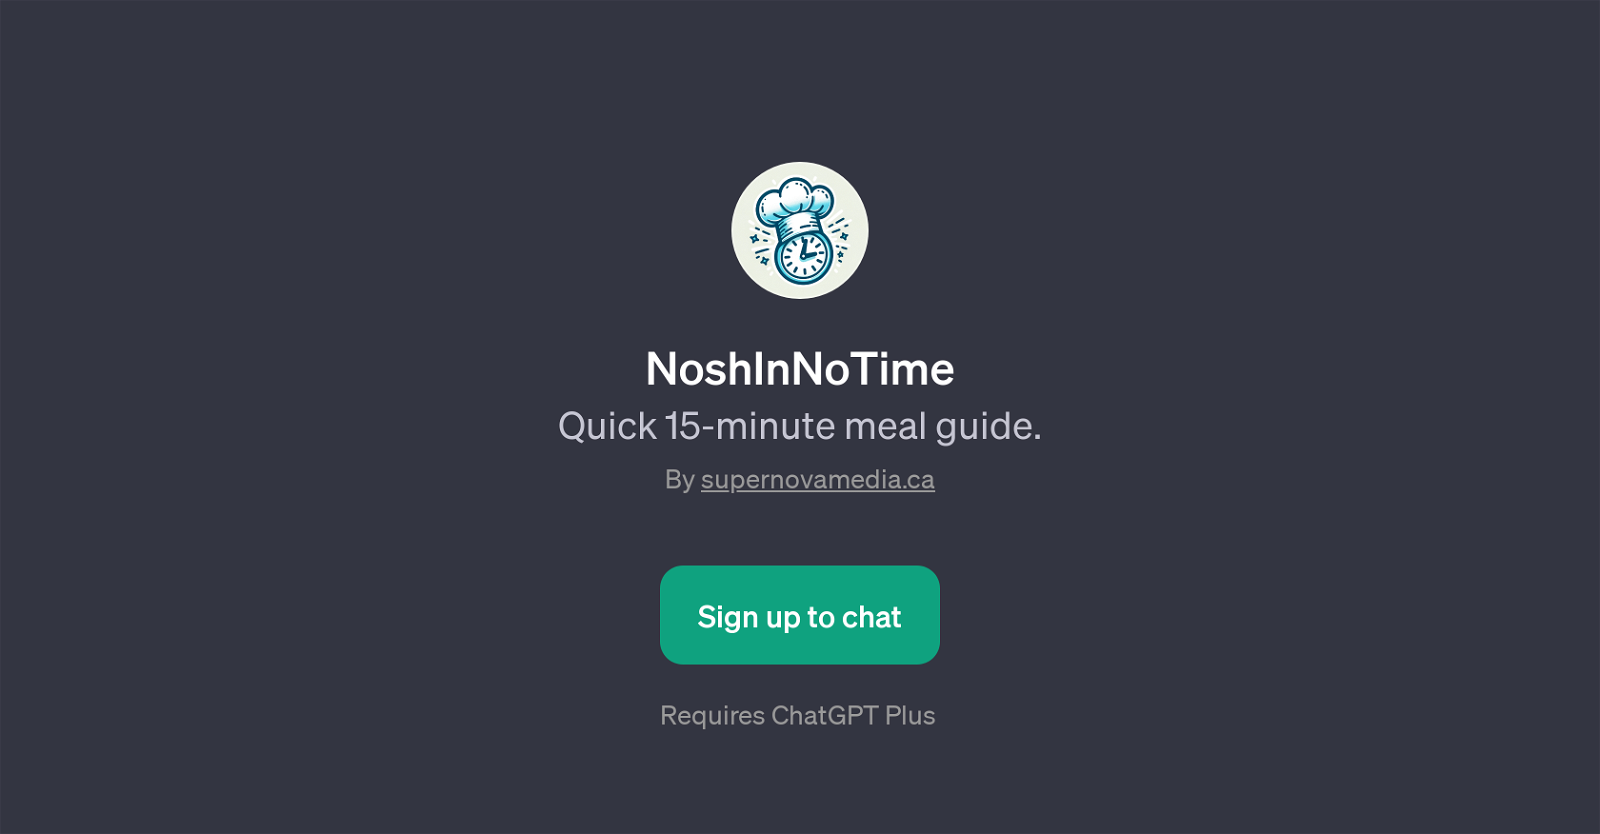 NoshInNoTime website